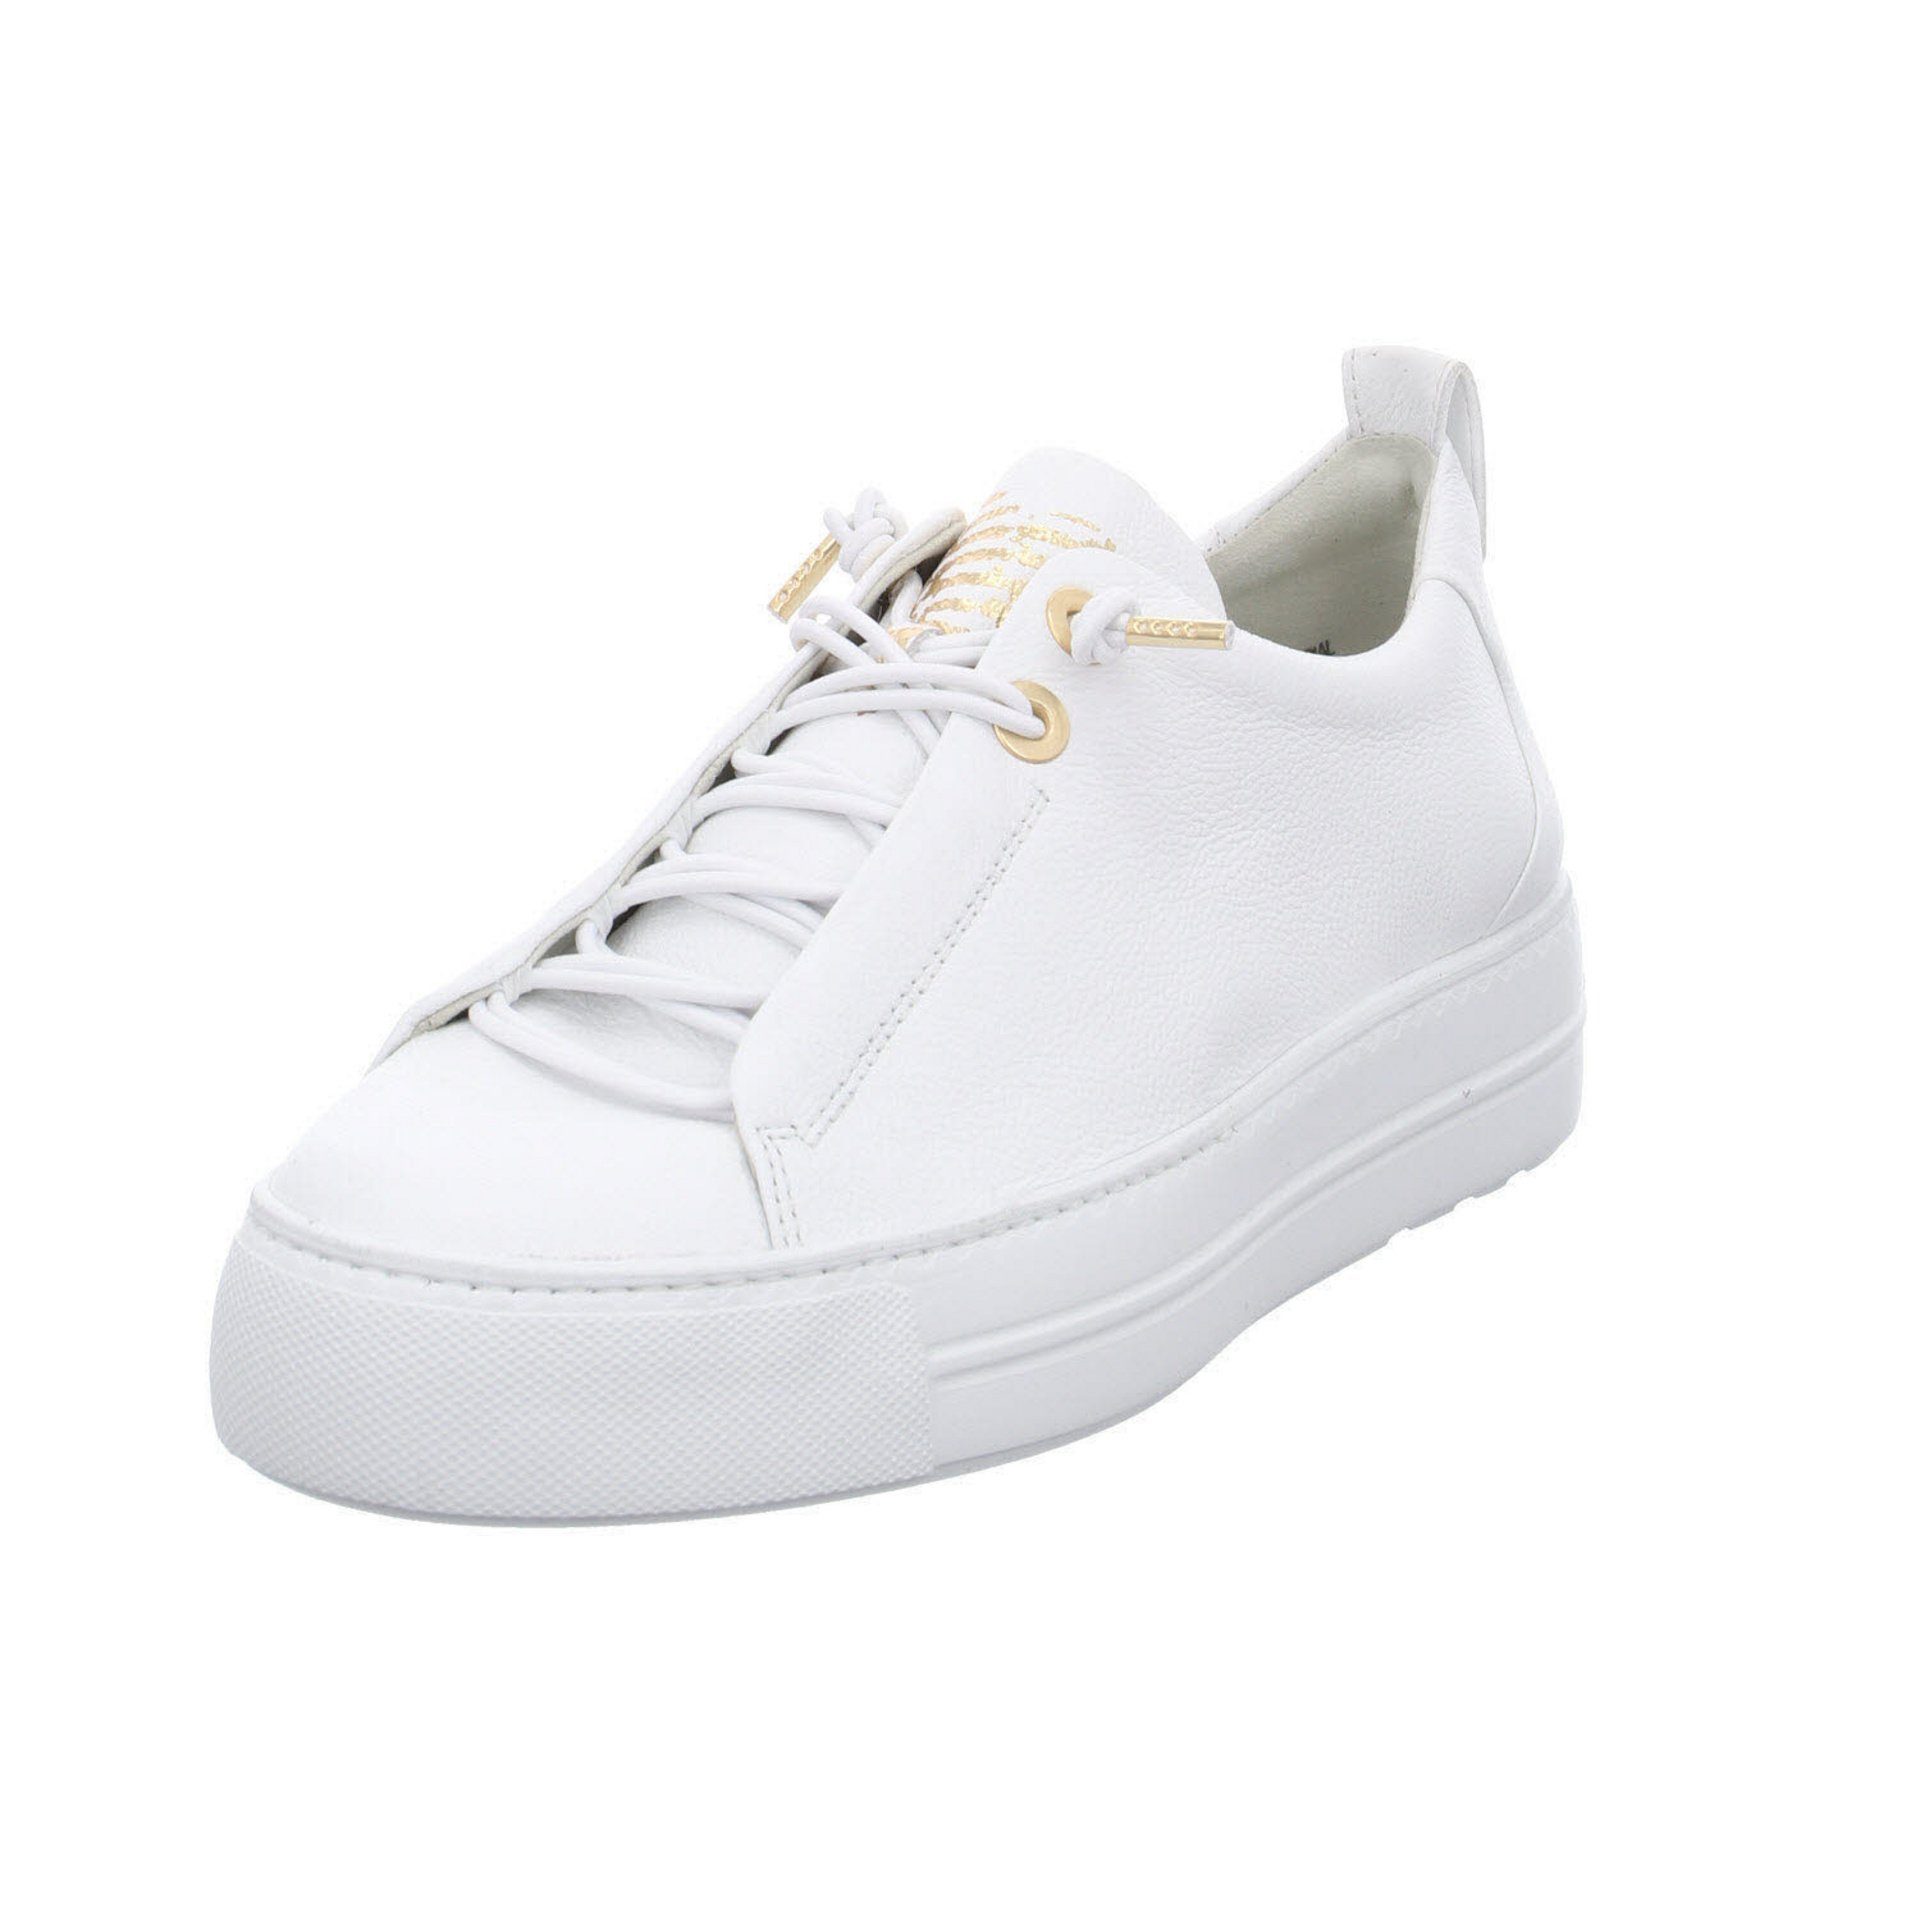 Schuhe Schnürschuh Slip-On Sneaker Sneaker Paul Damen white/gold Glattleder Green